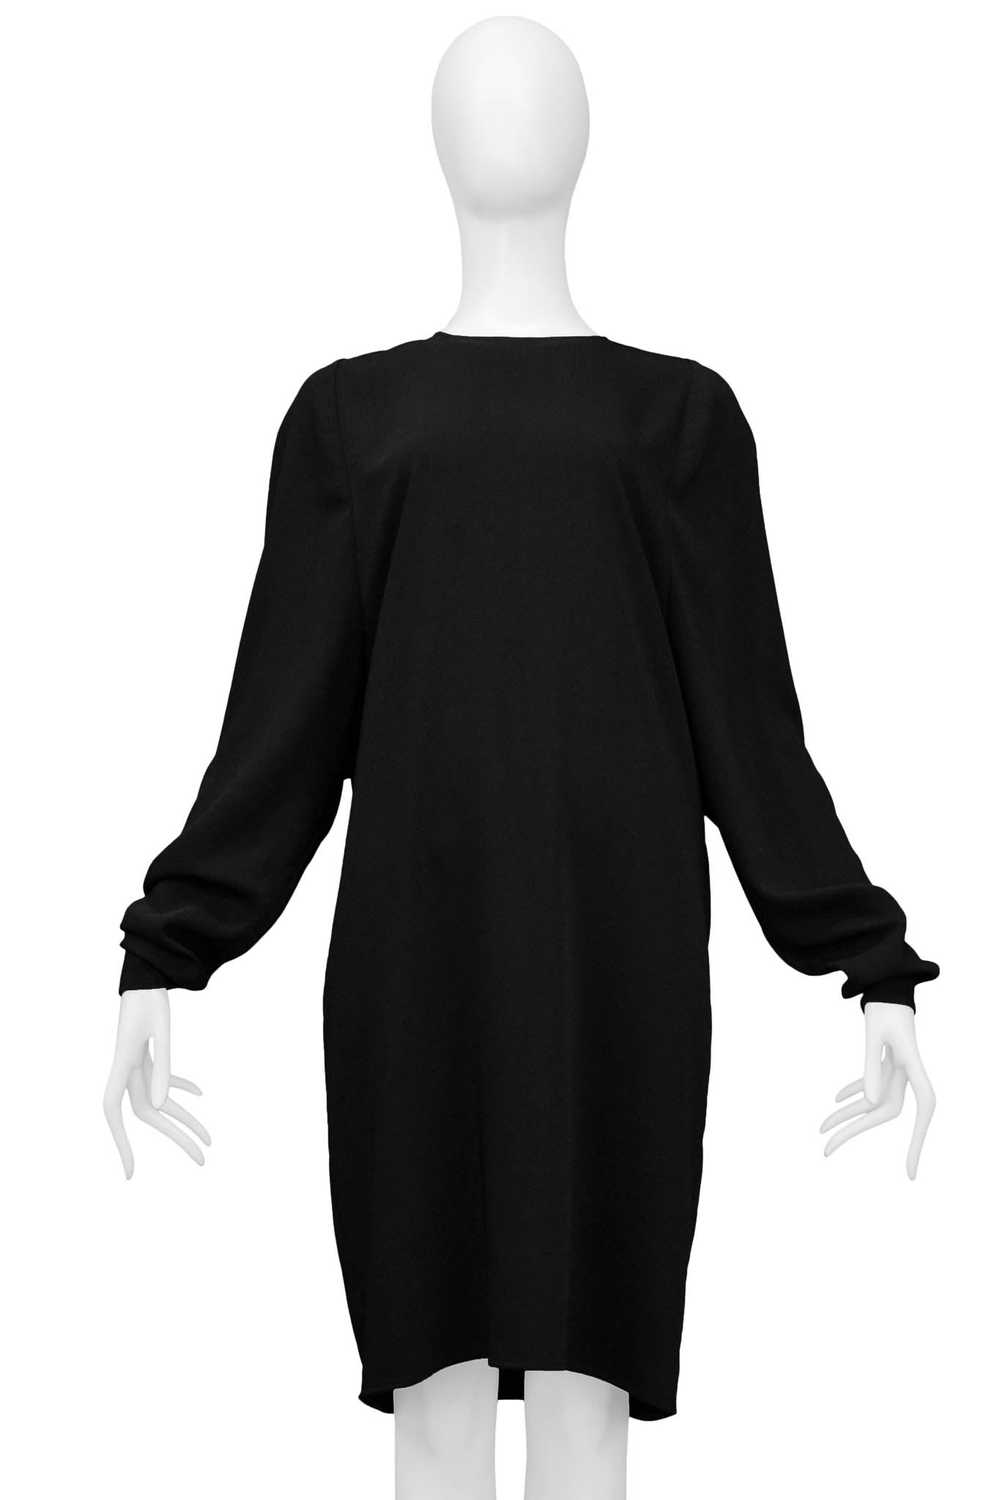 MARGIELA BLACK DRESS WITH LONG DOLMAN SLEEVES - image 1